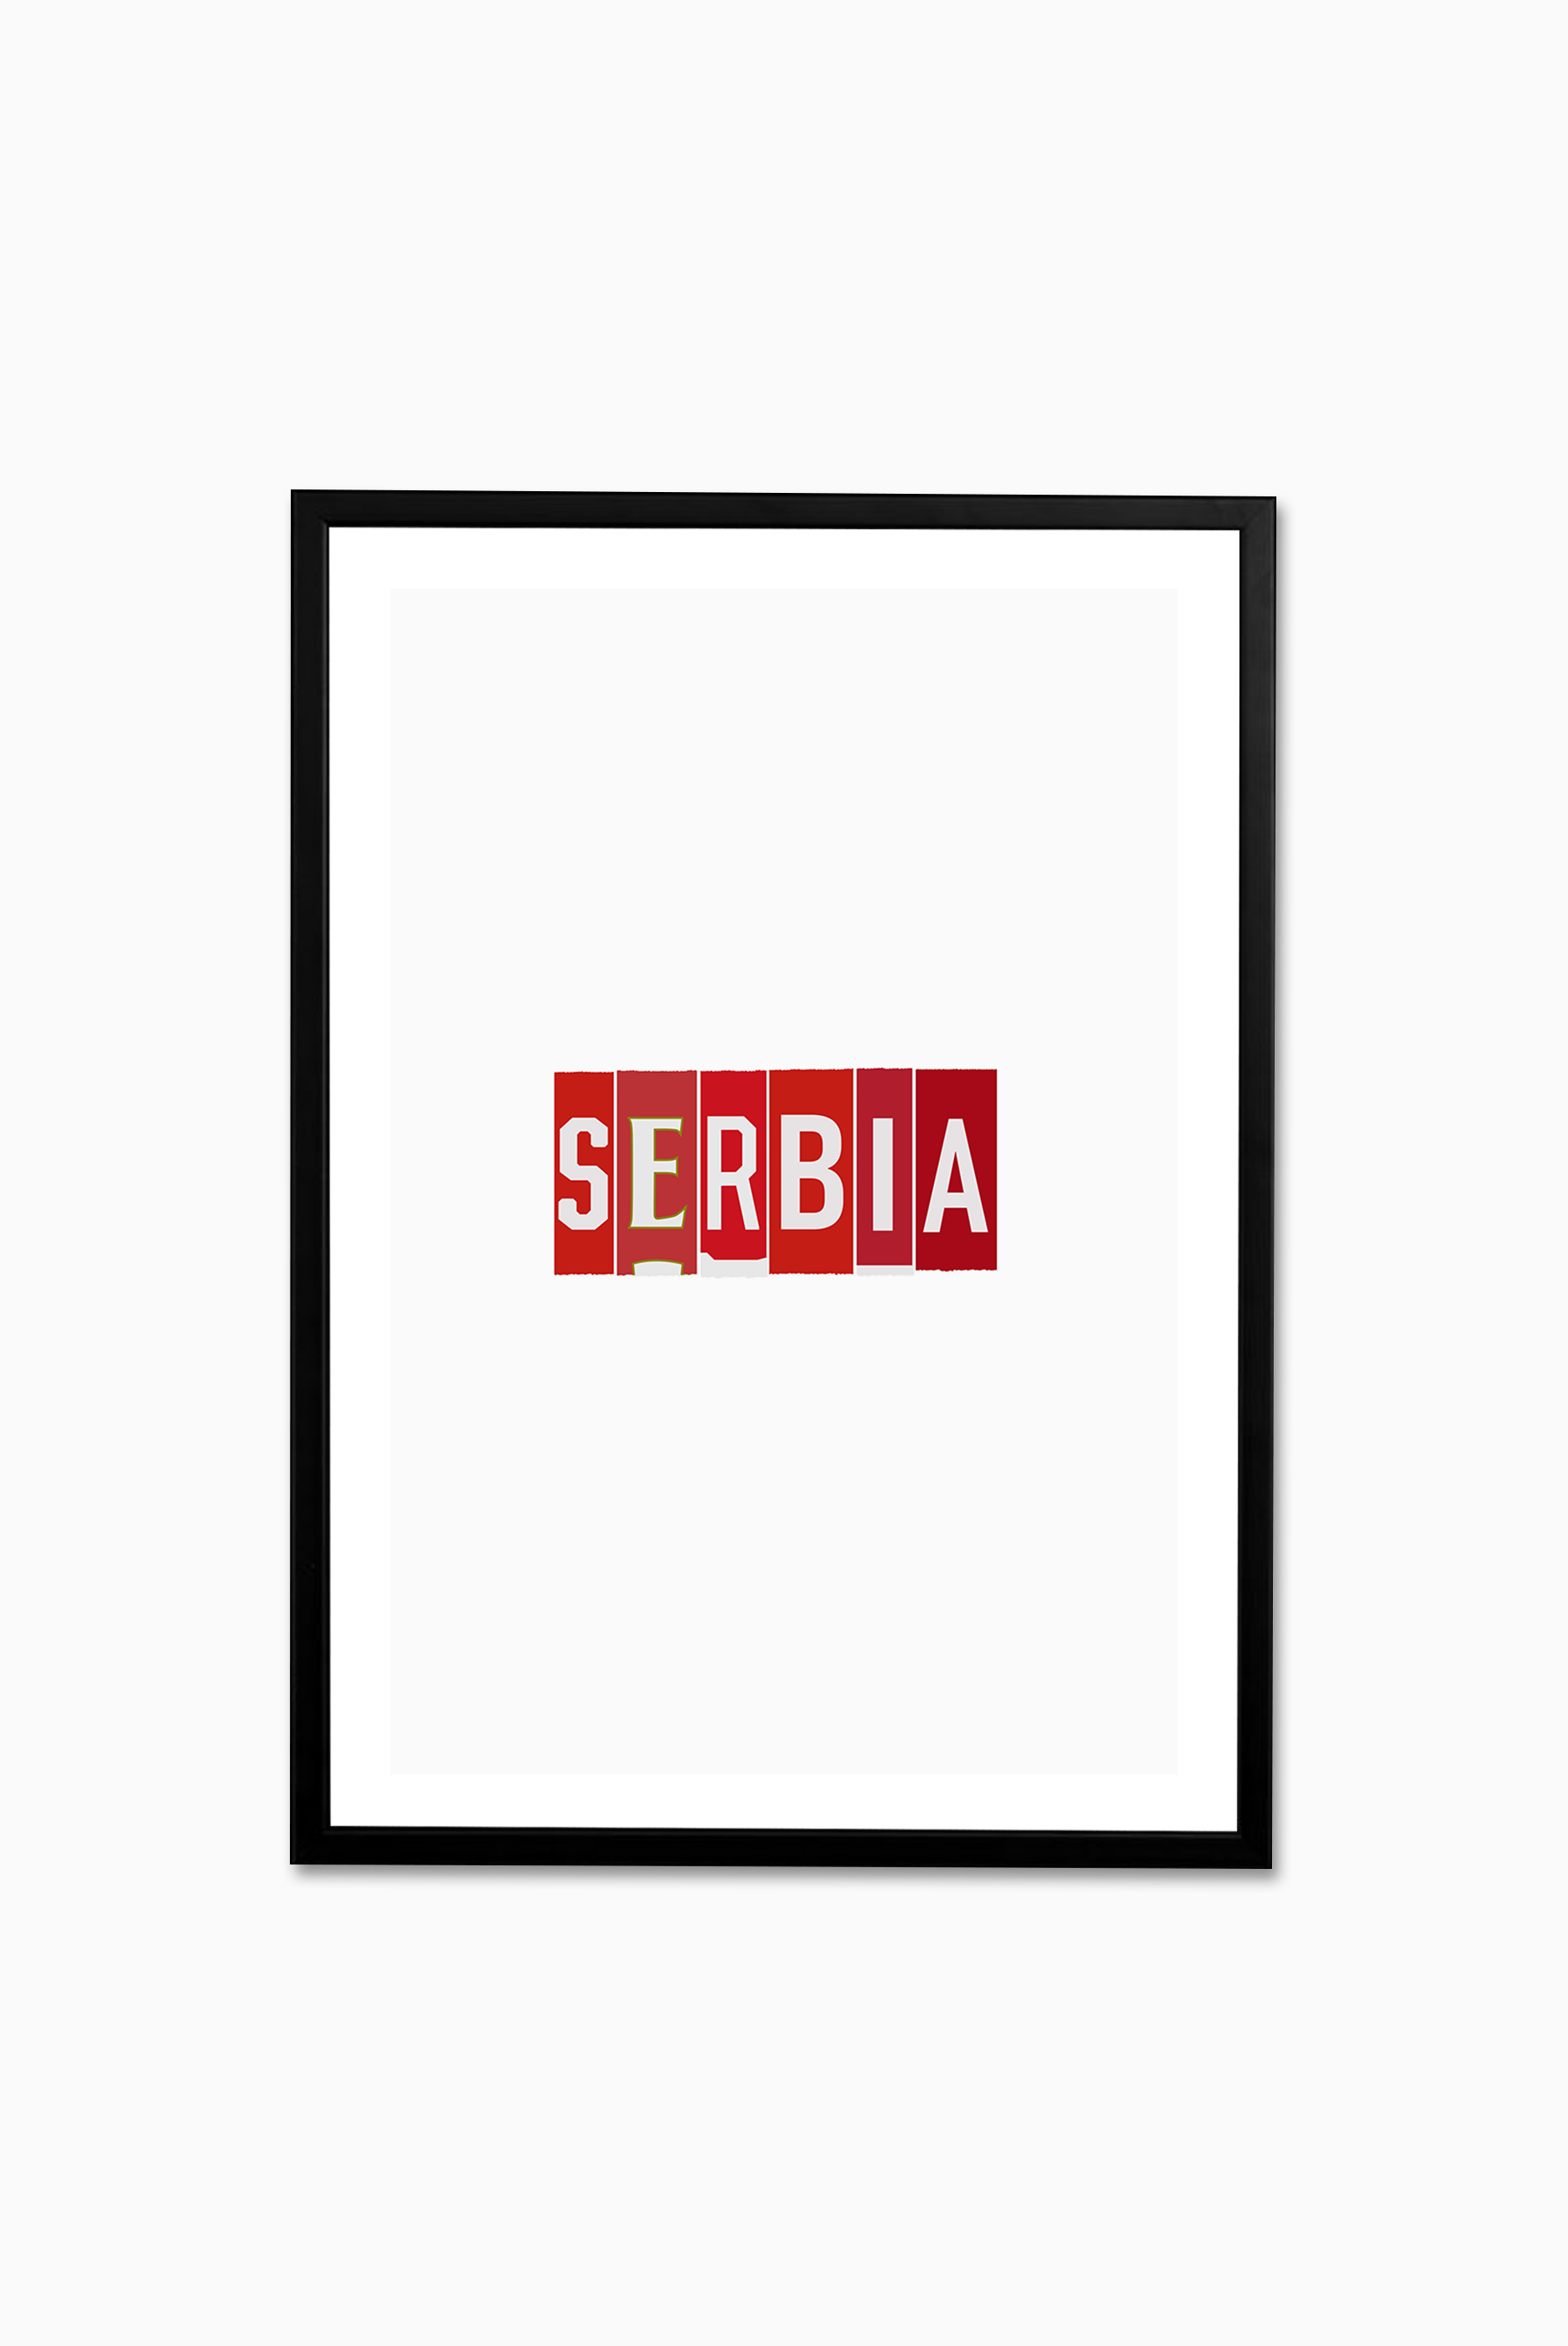 Serbia Wear and Tear / Print